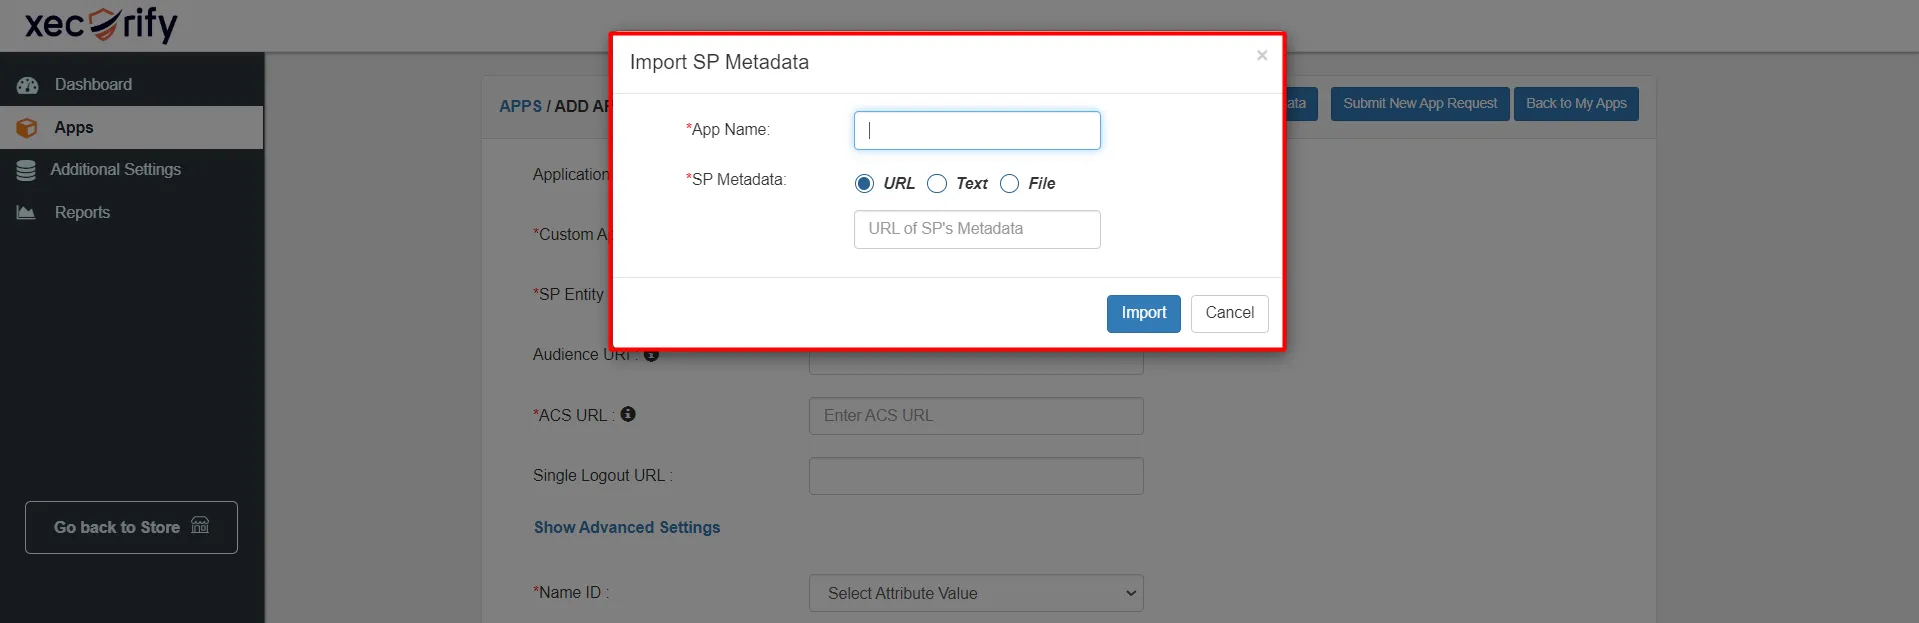 Shopify som IDP - Logga in med Shopify-uppgifter - Ange SP Metadata